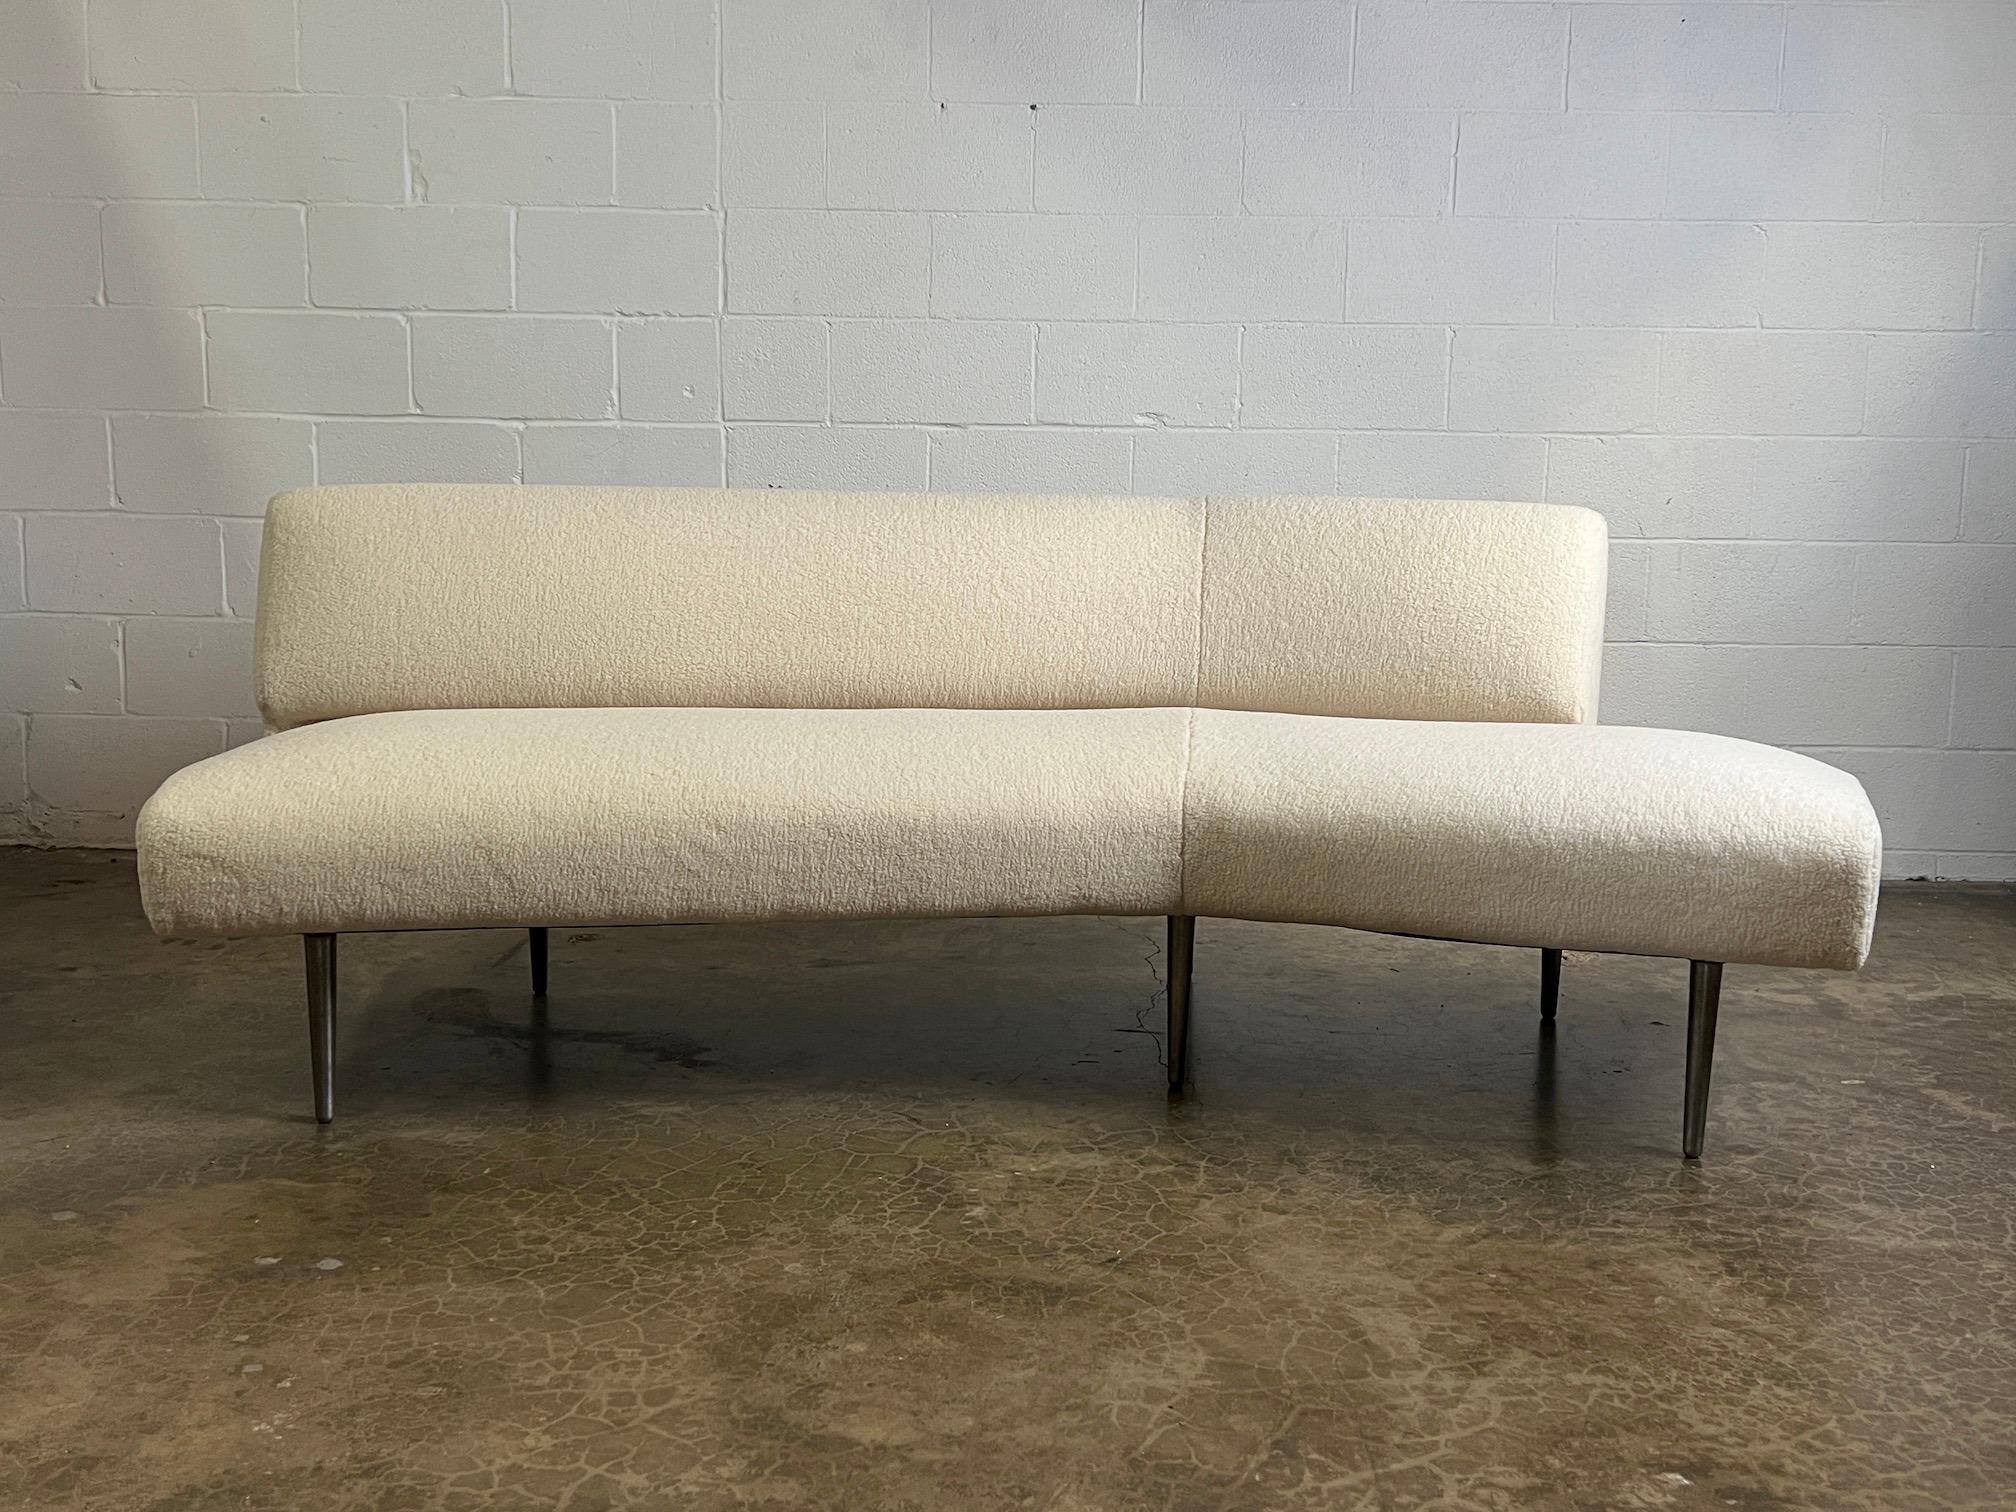 Mid-20th Century Dunbar Angle Sofa #4756 on Aluminum Legs